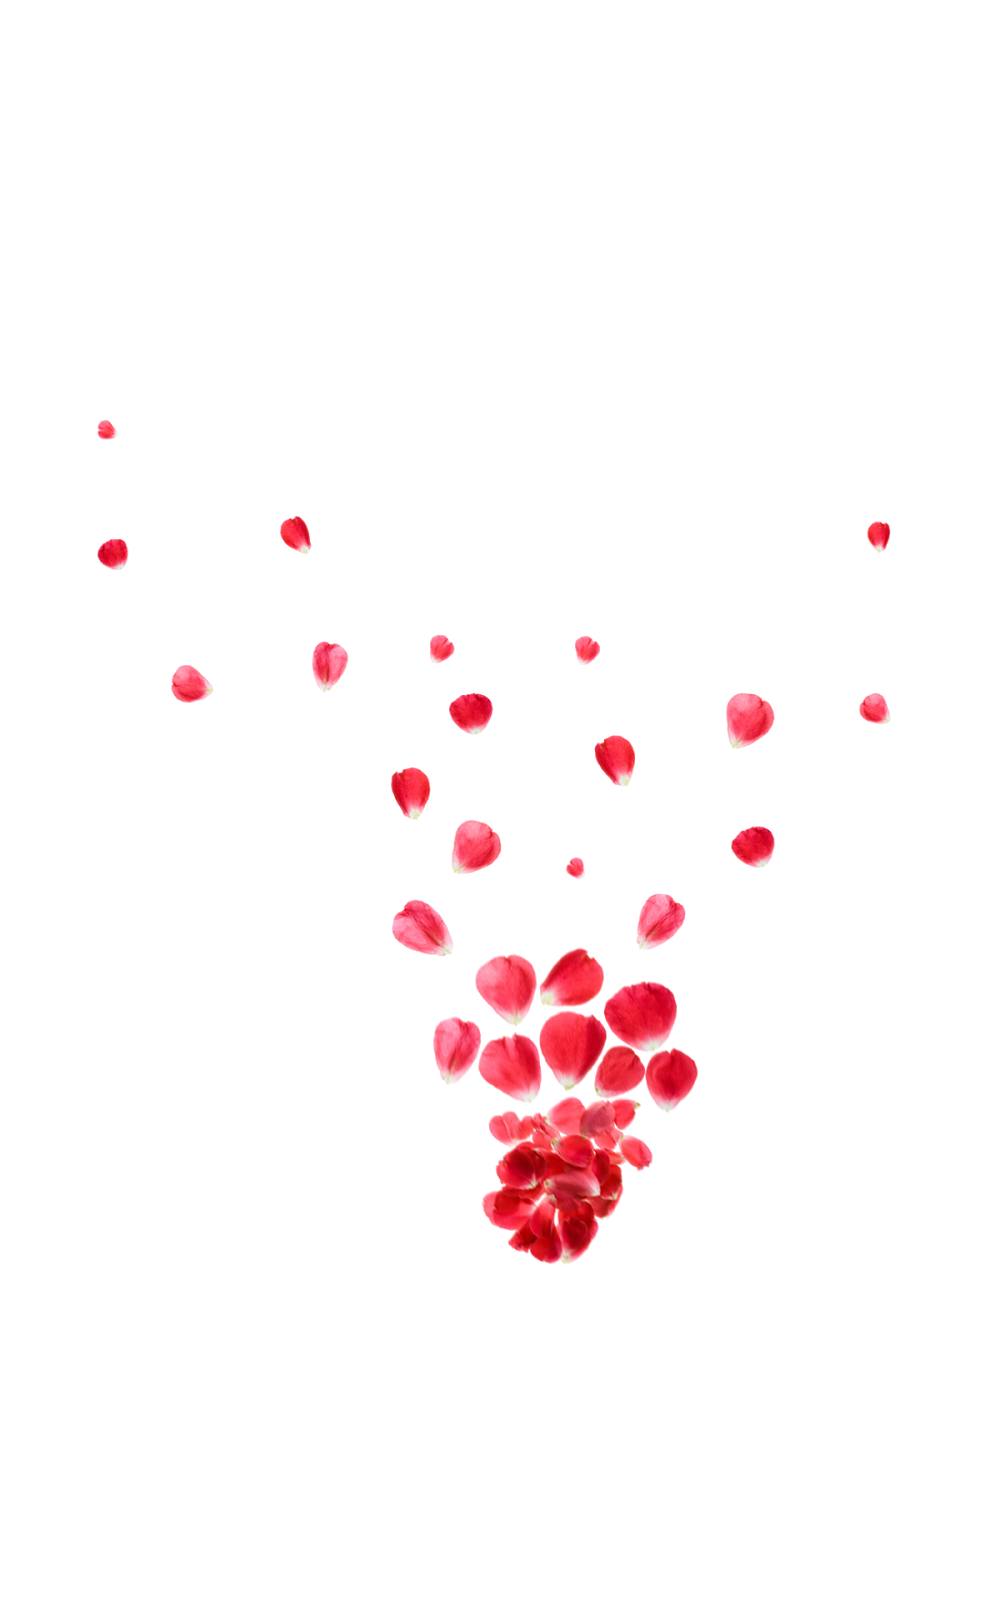 Download PNG image - Falling Rose Petals Background PNG 